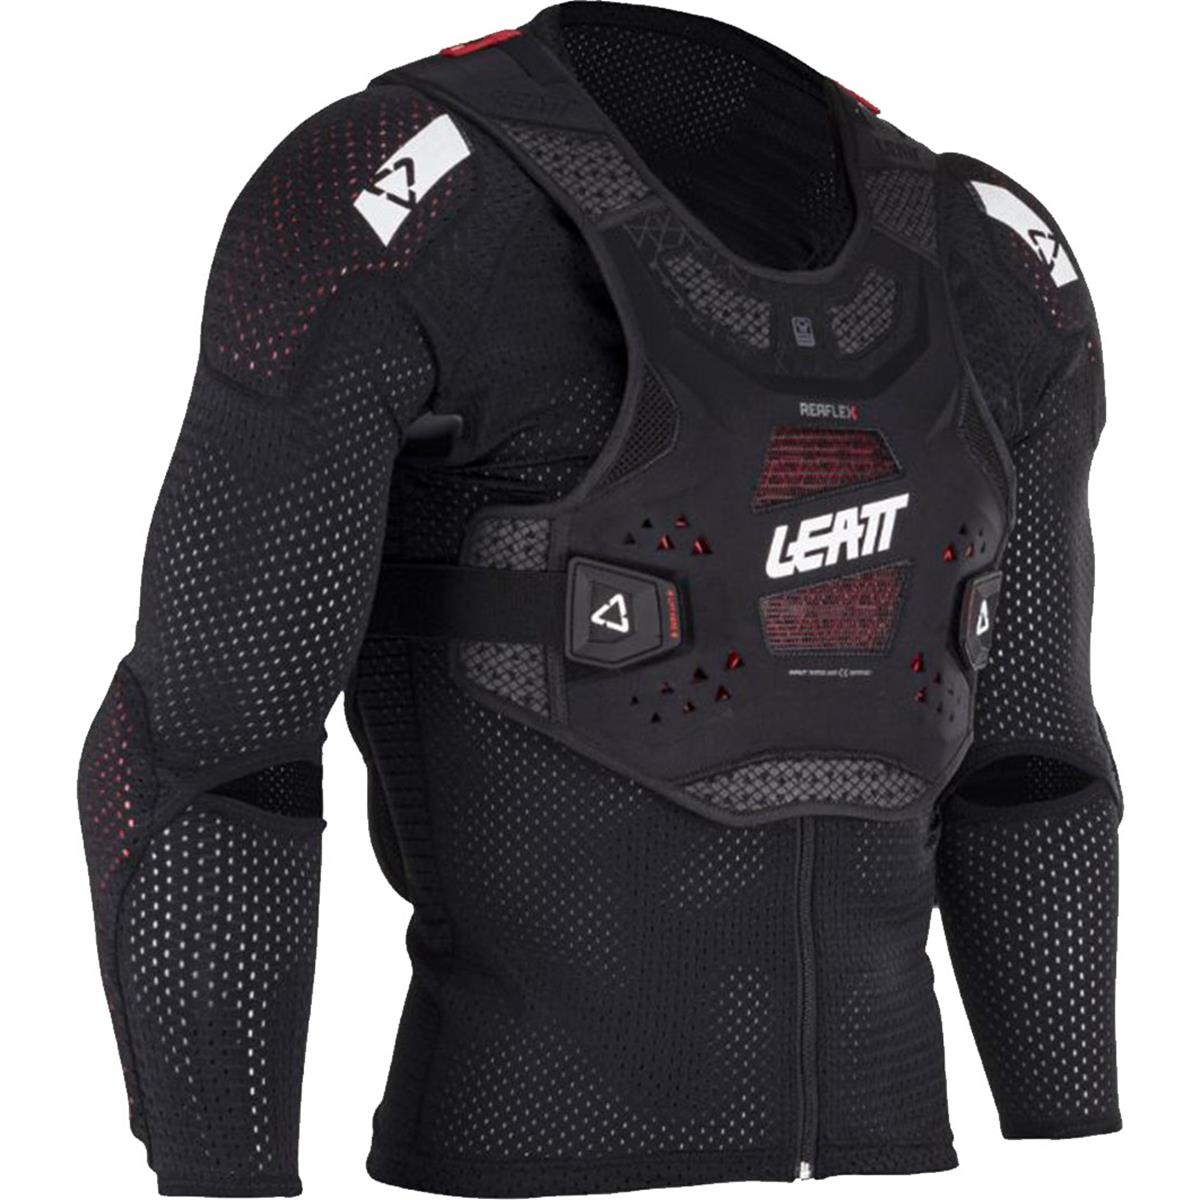 Leatt Protector Jacket ReaFlex Black